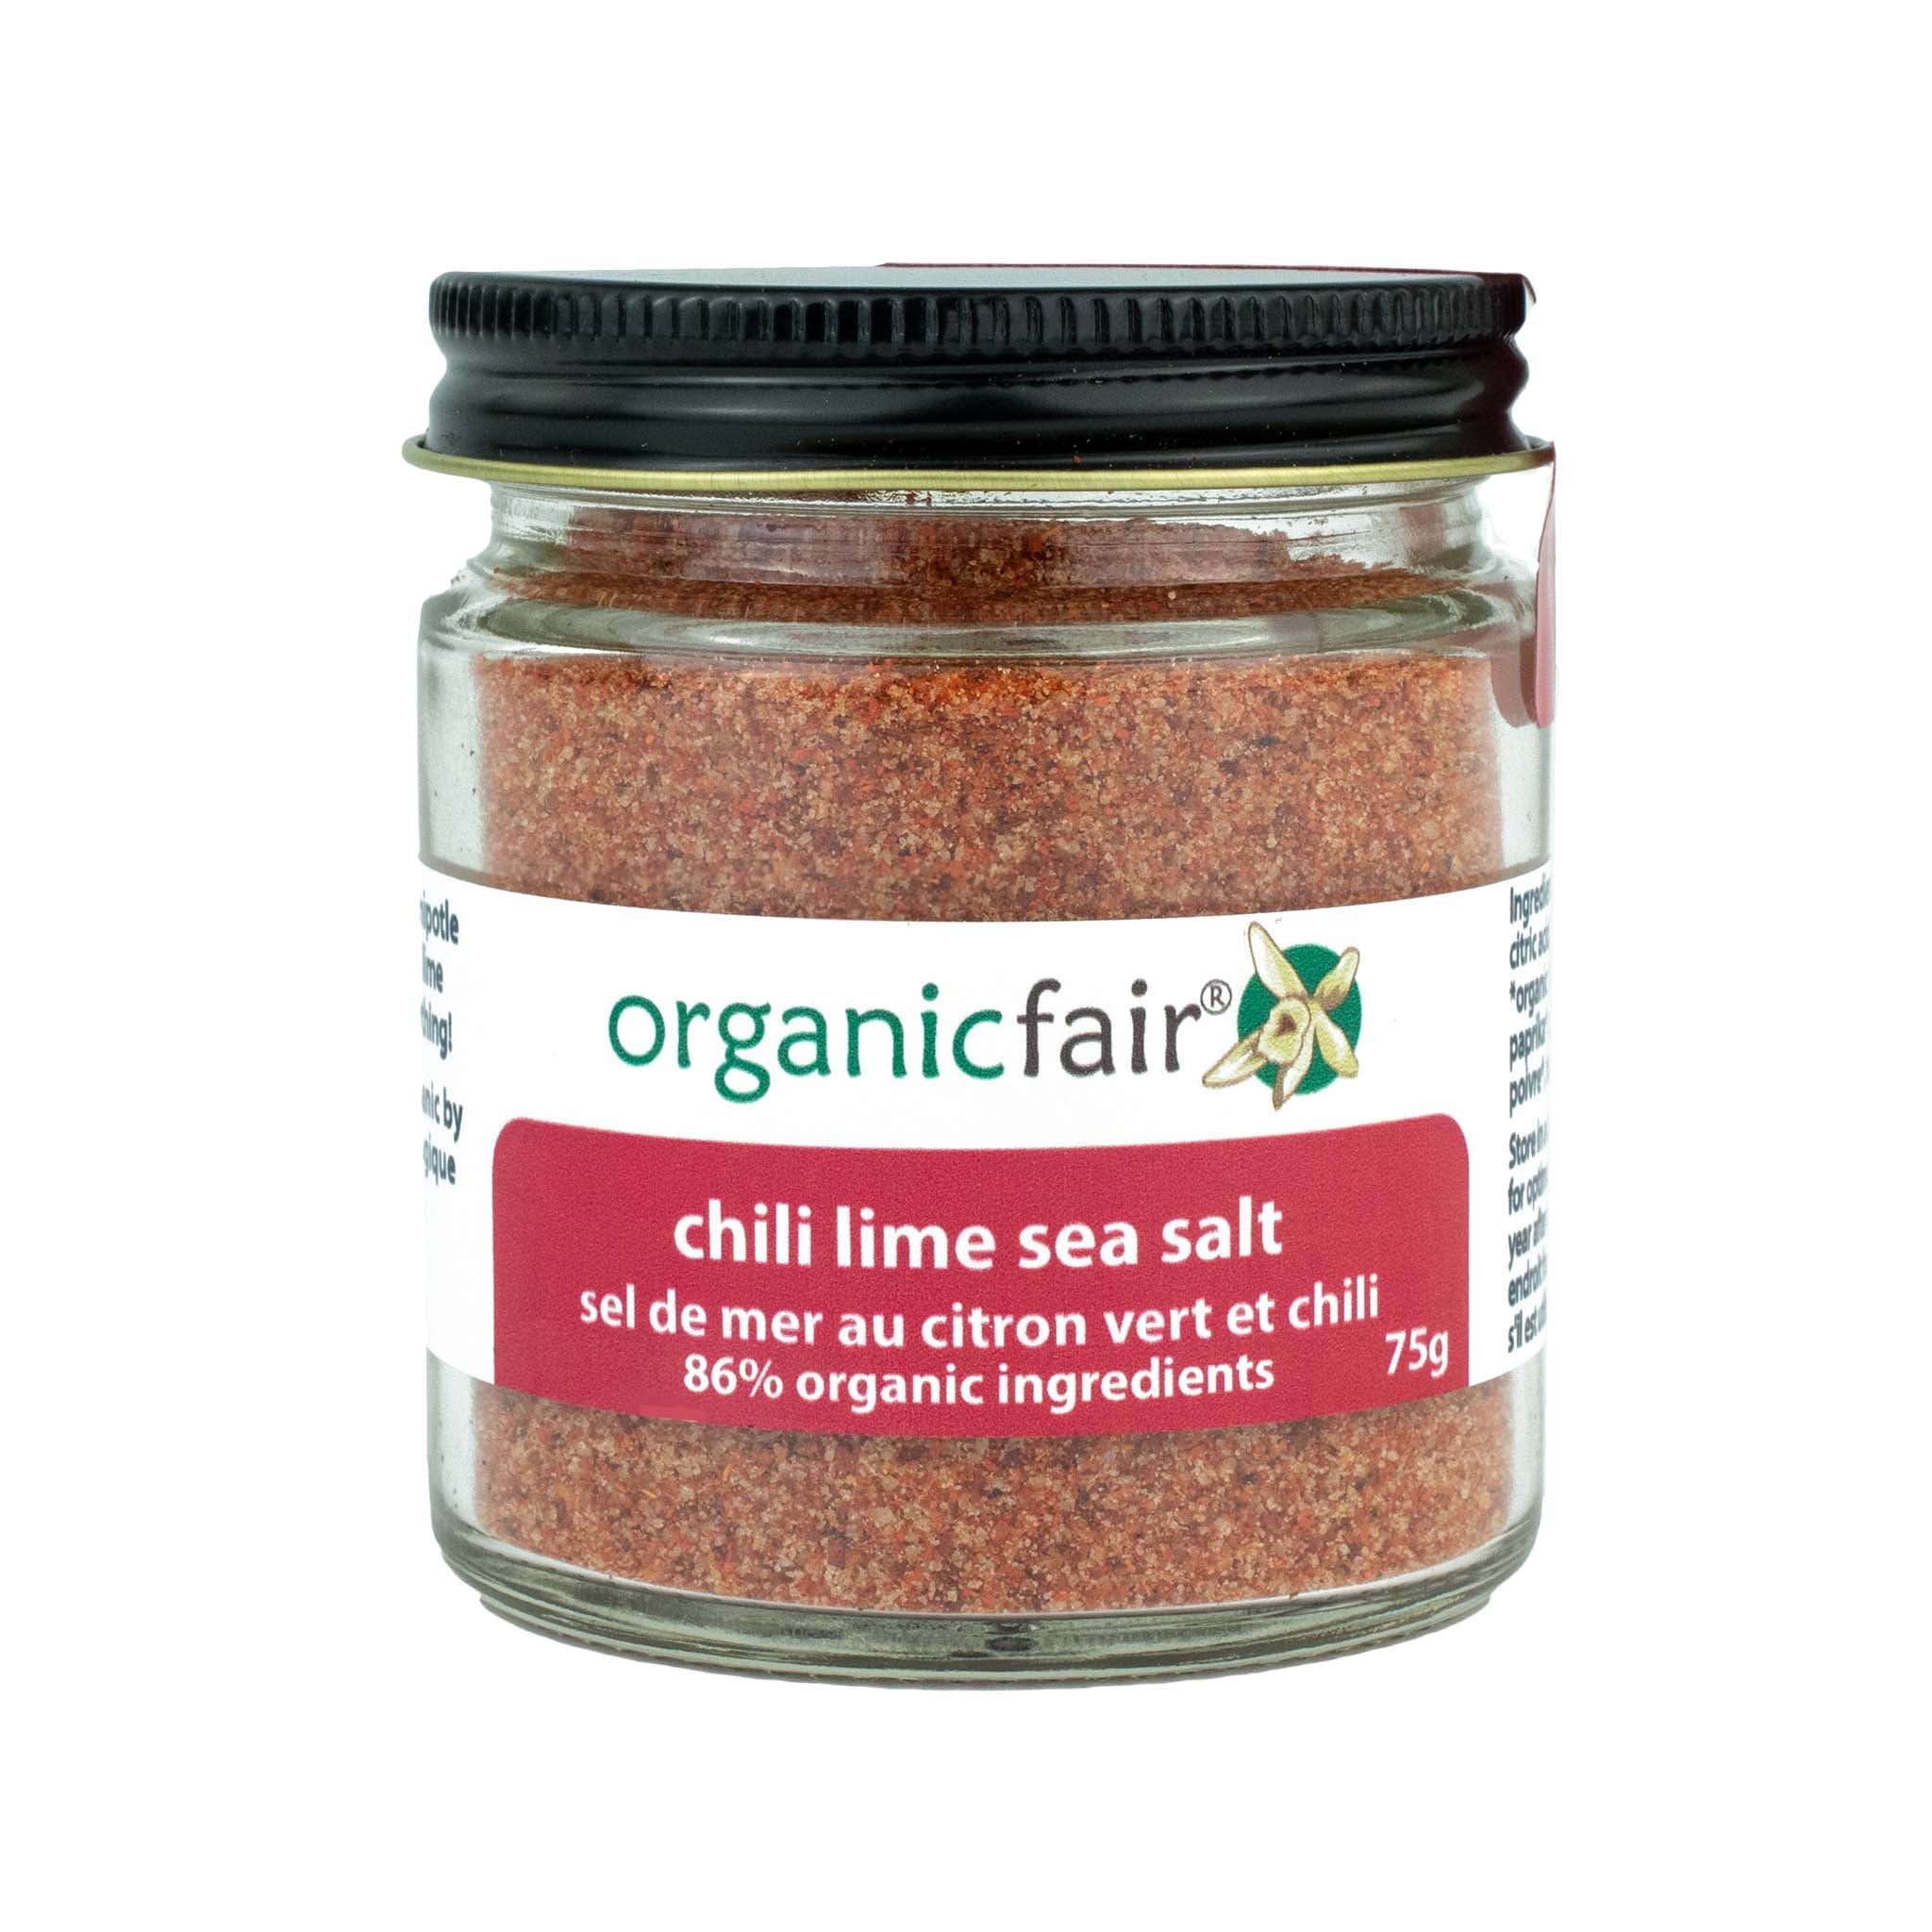 Chili Lime Sea Salt - organicfair.com